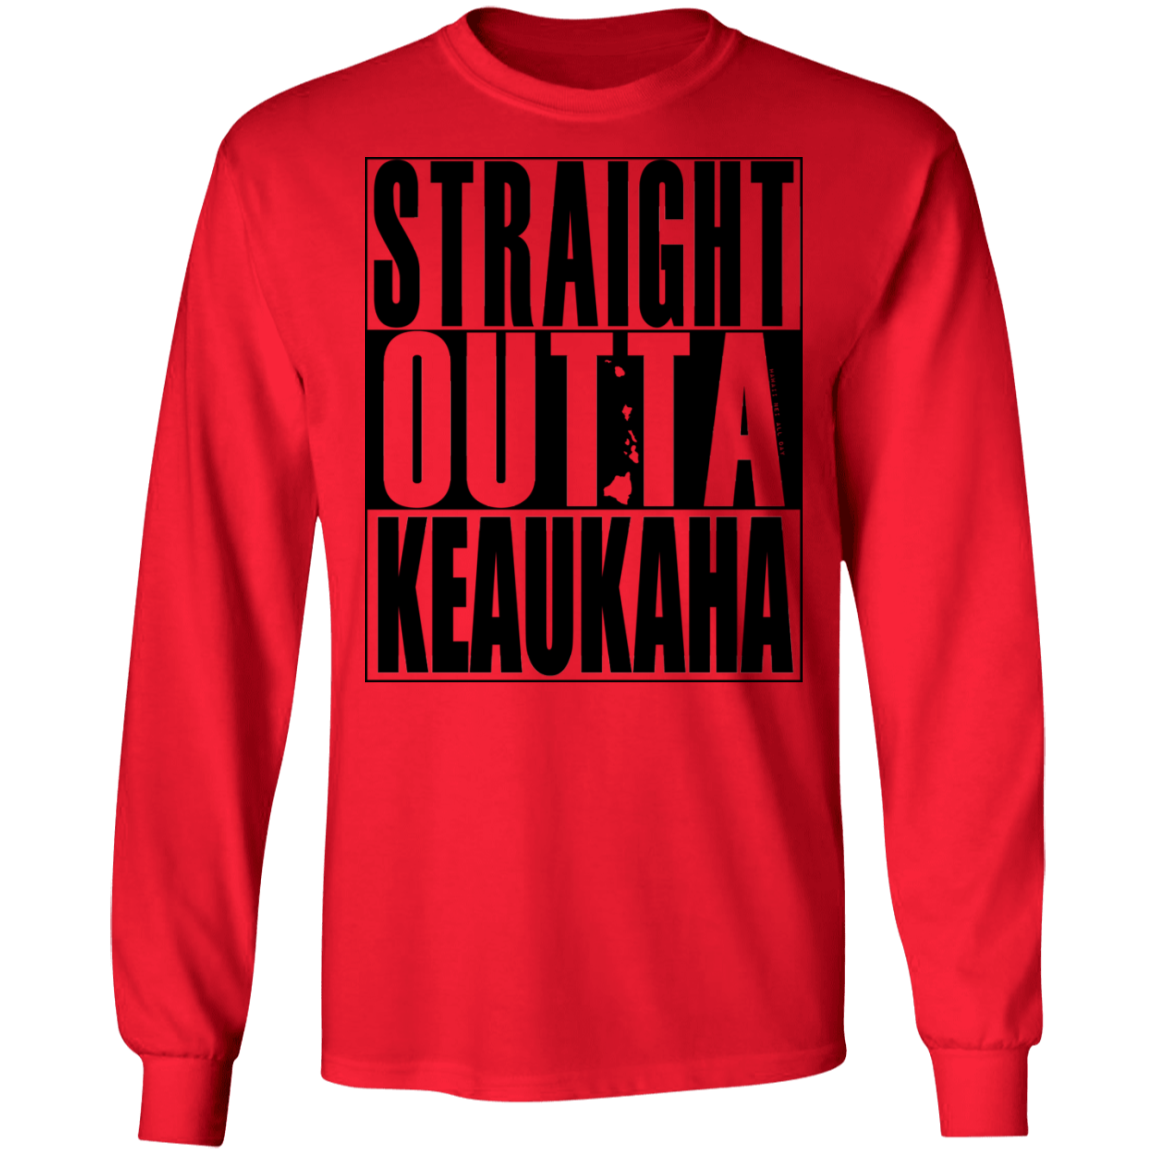 Straight Outta Keaukaha(black ink) LS T-Shirt